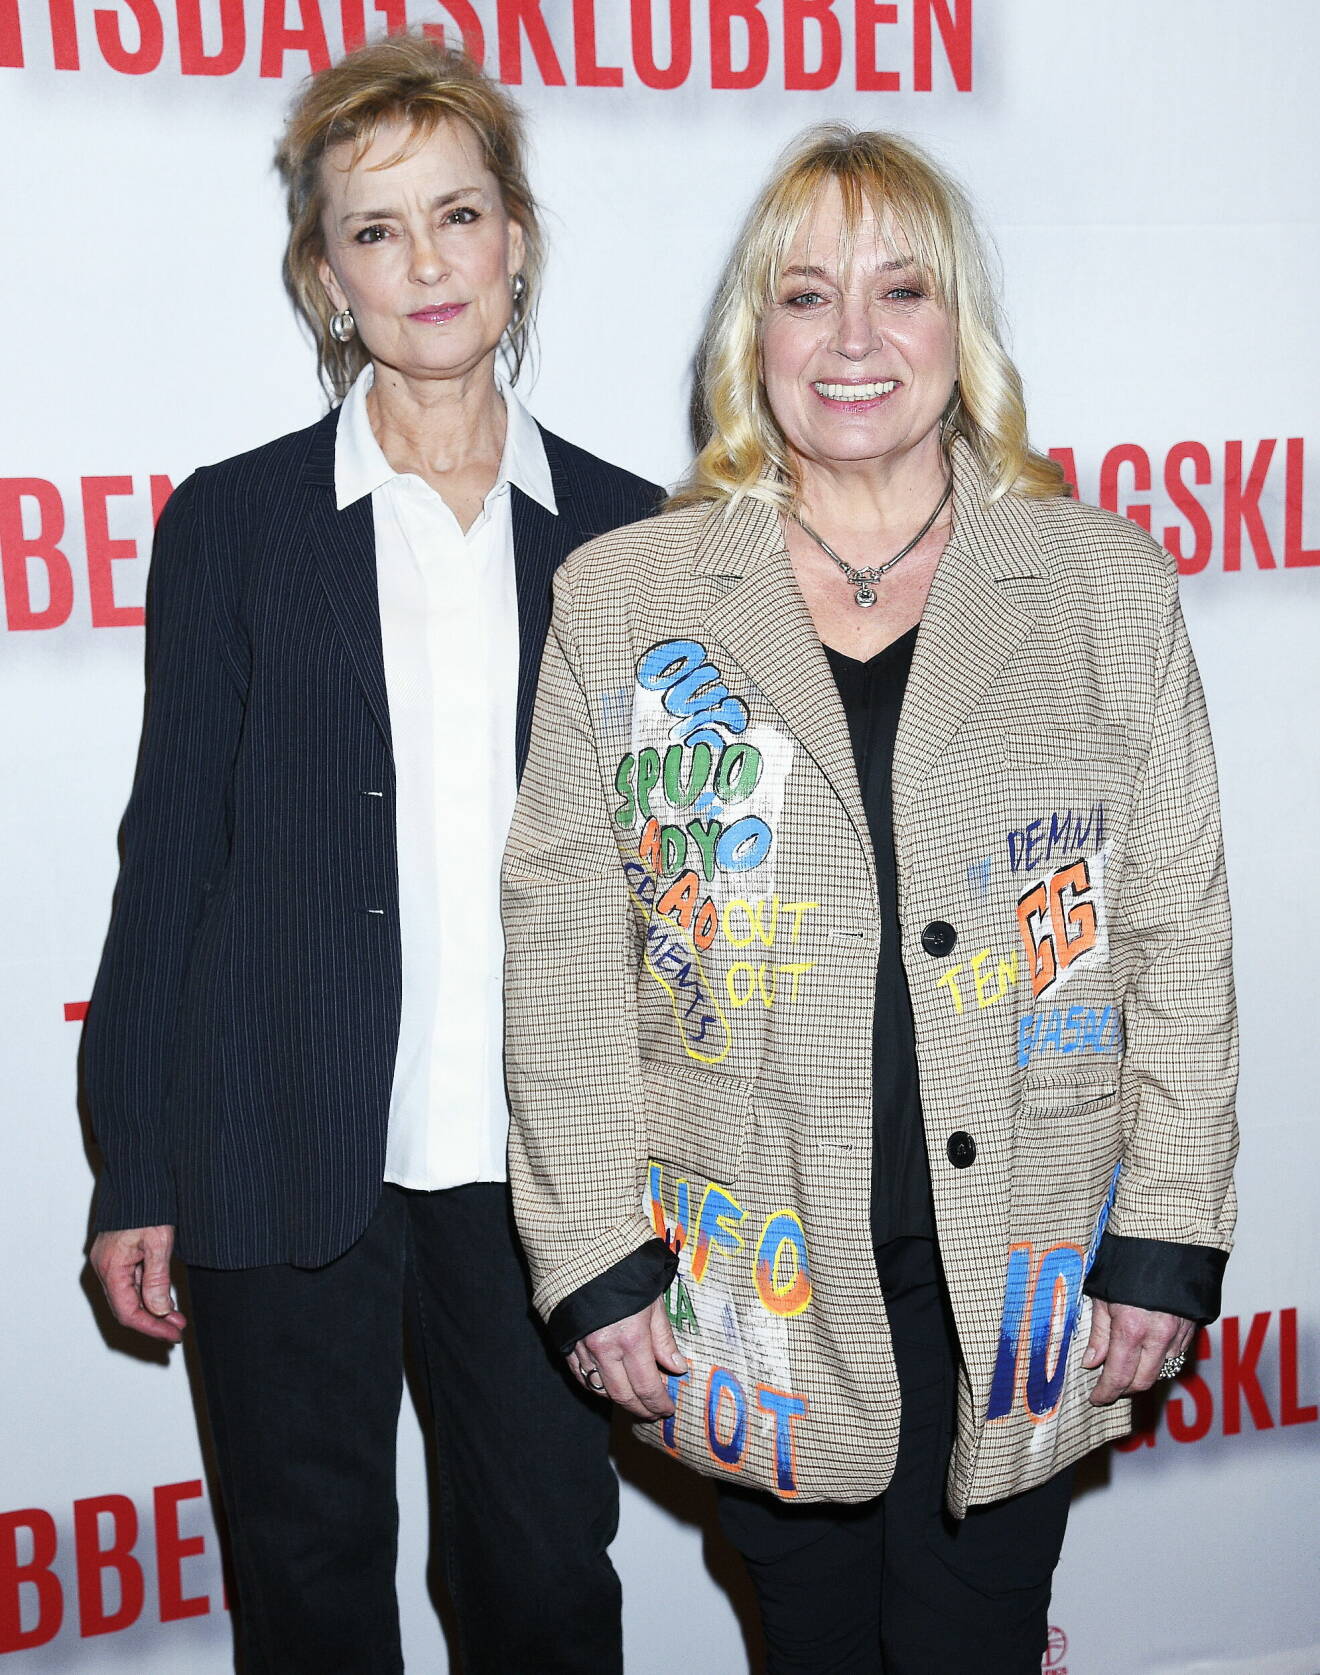 Marie Richardson och Sussie Eriksson på premiären av Tisdagsklubben.